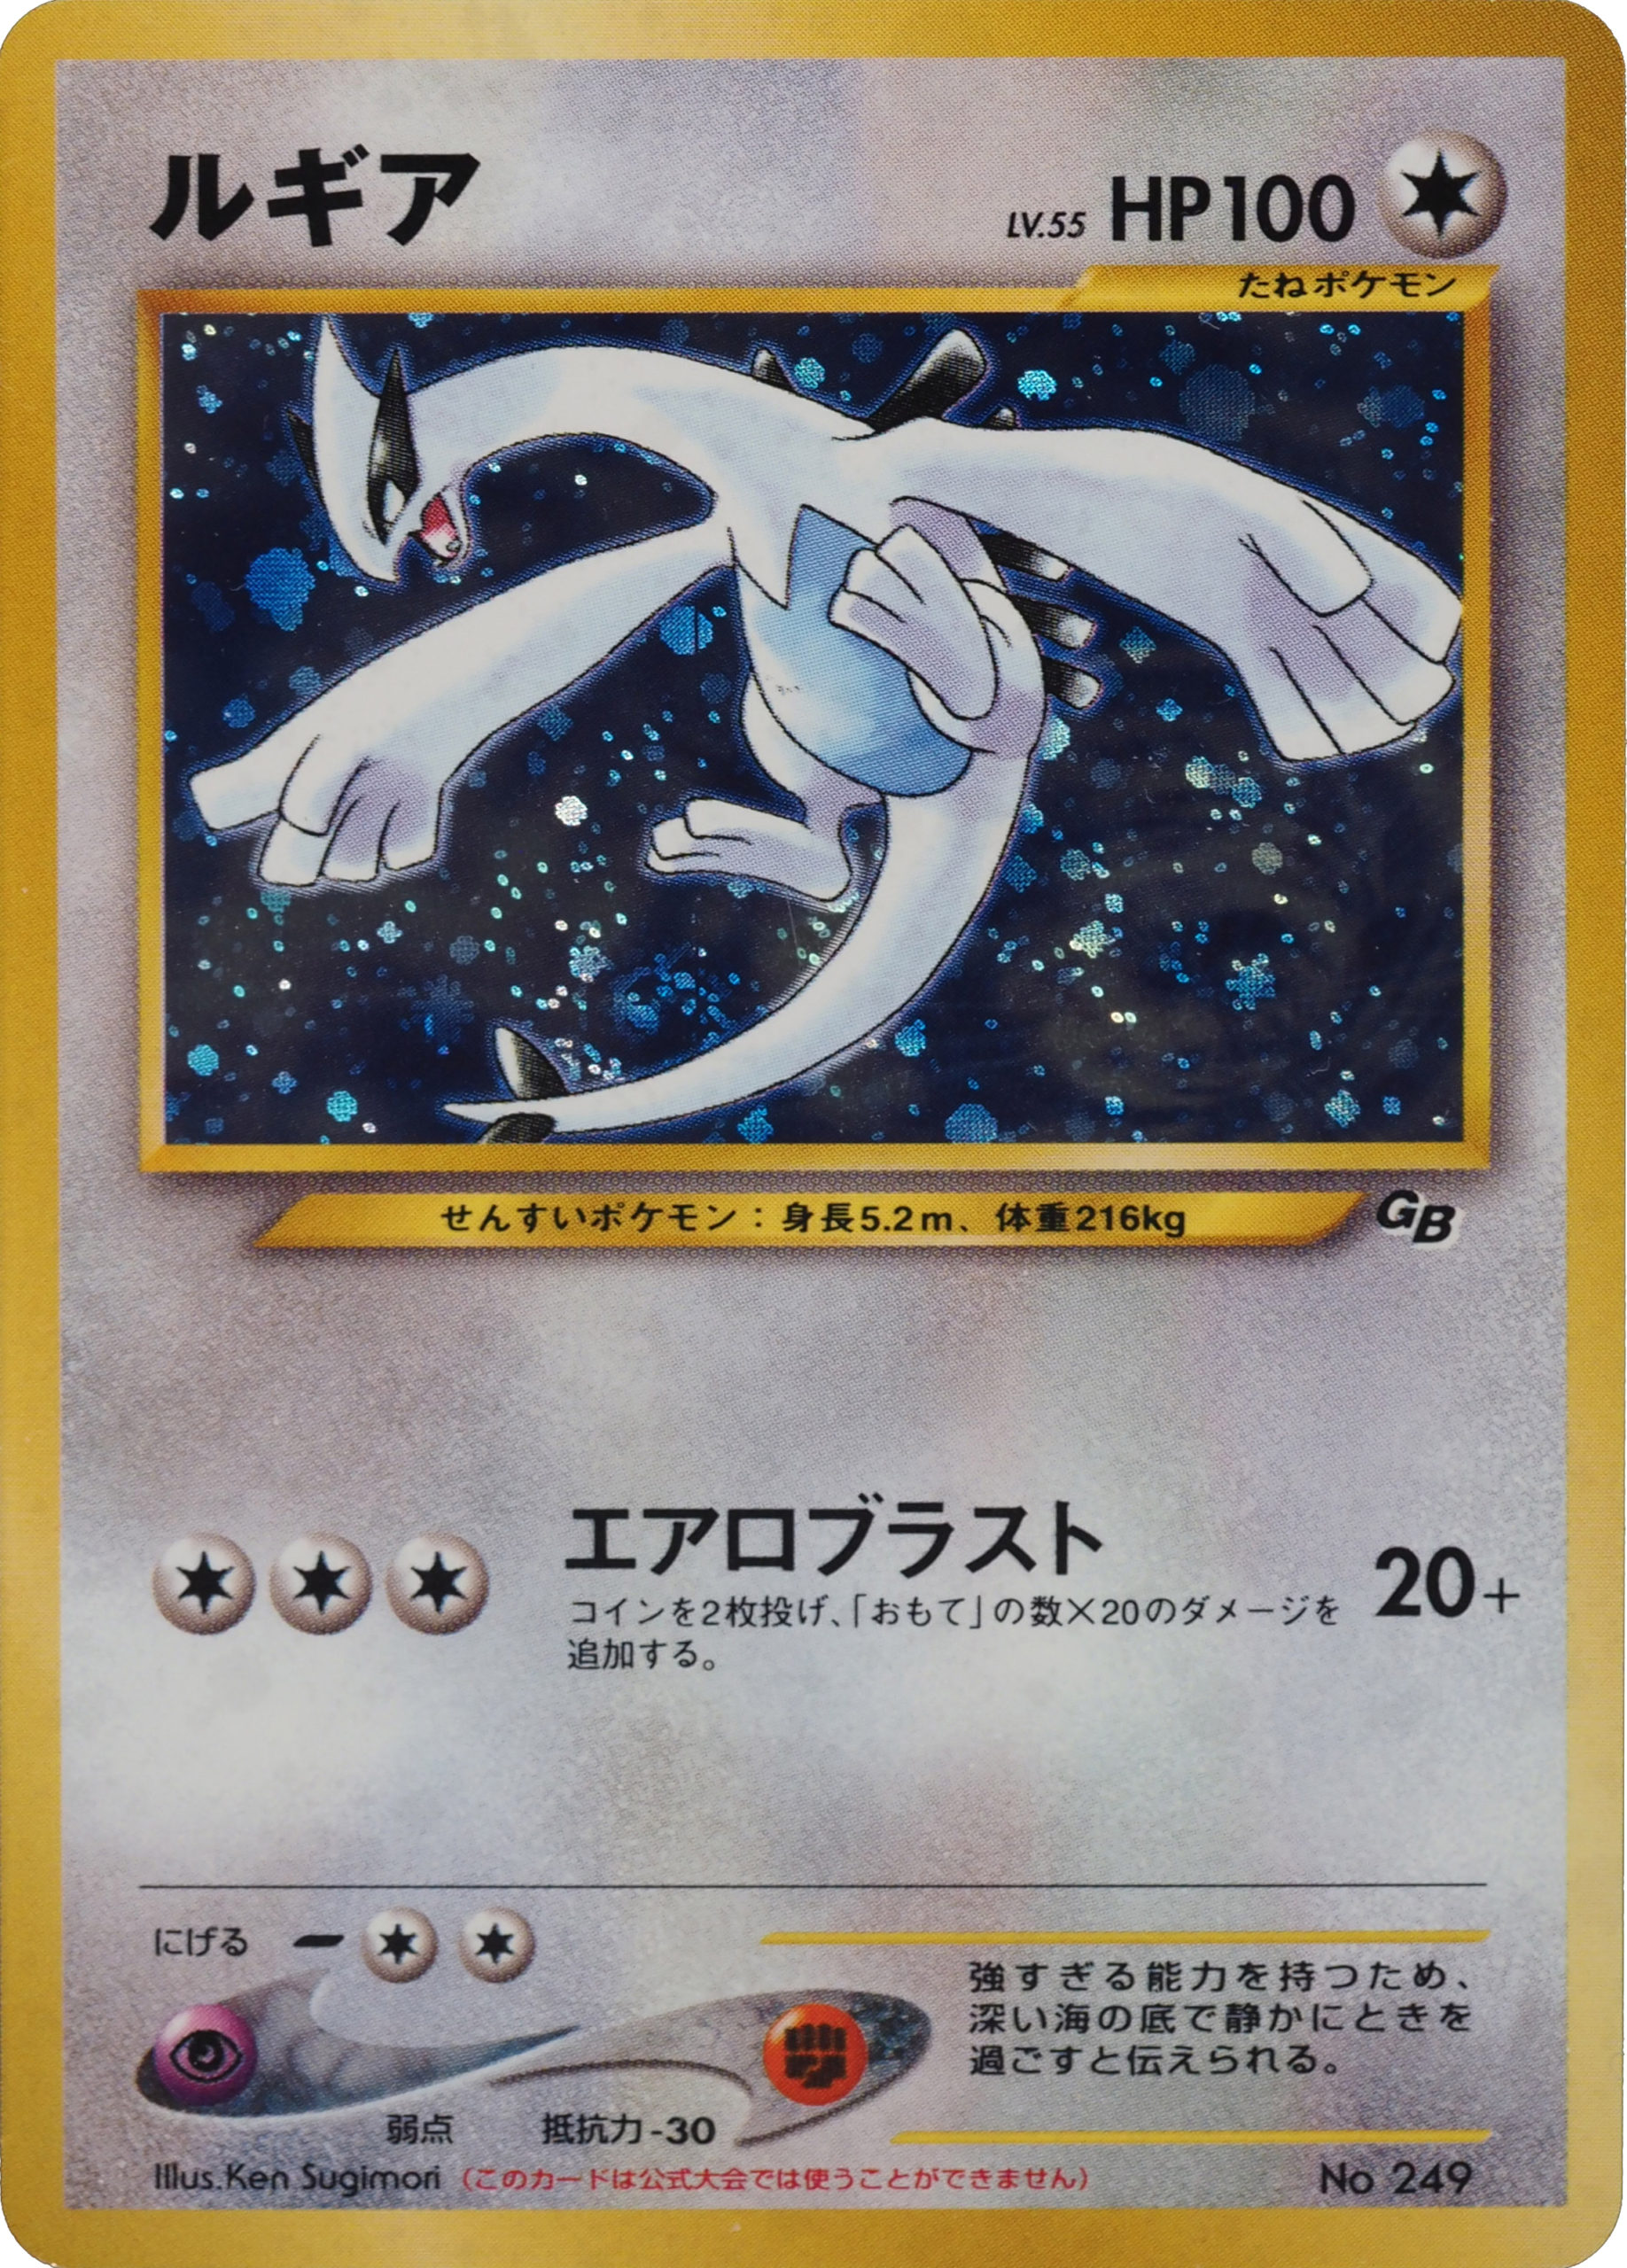 Mesprit card with two X (Print error) : r/PokemonTCG